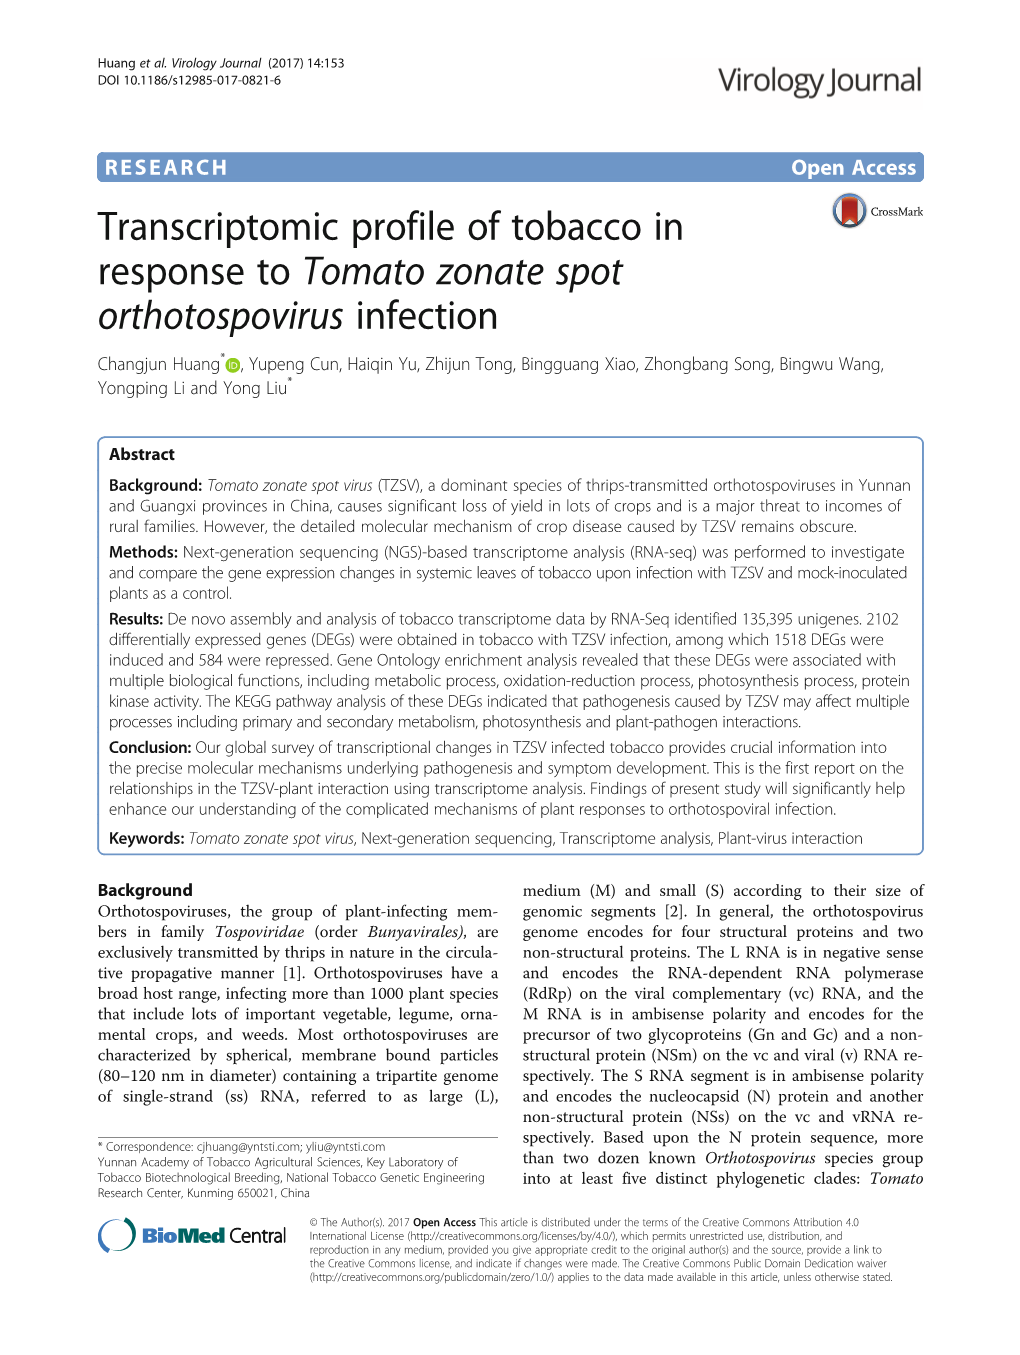 Transcriptomic Profile of Tobacco in Response to Tomato Zonate Spot